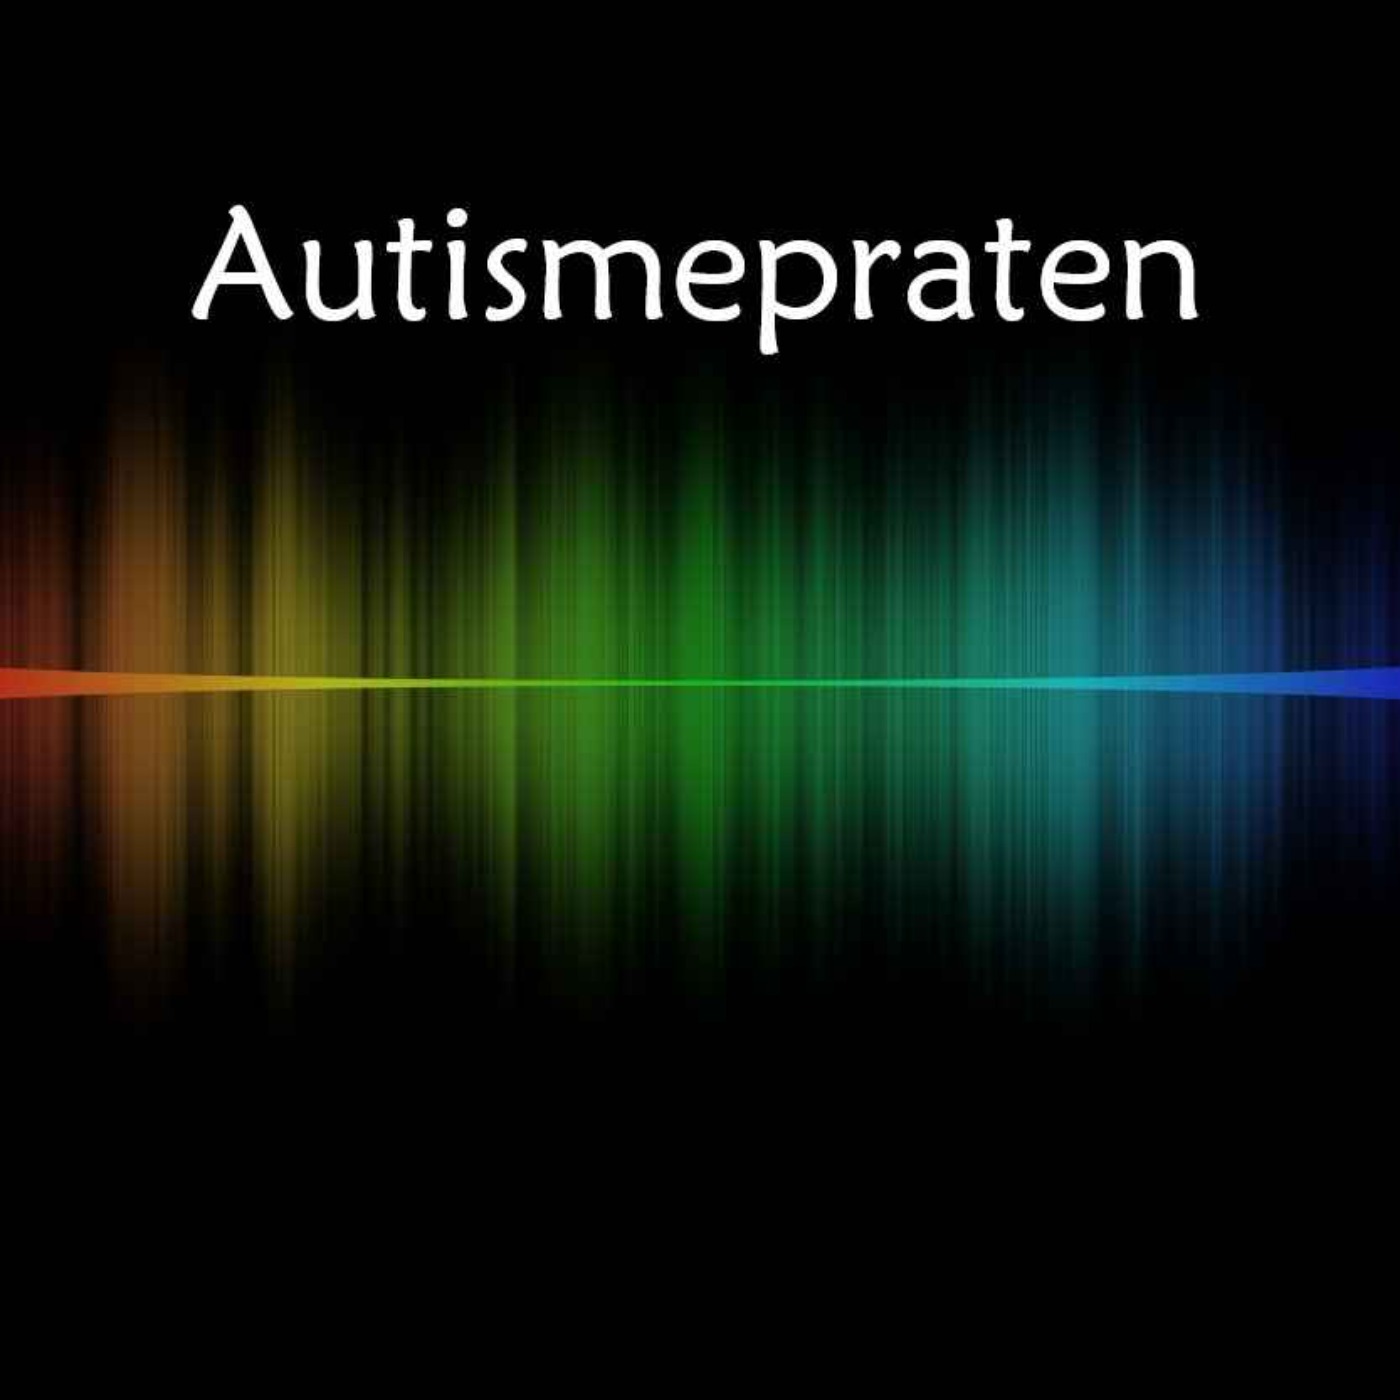 Autismepraten episode 2 - Autisme og Identitet